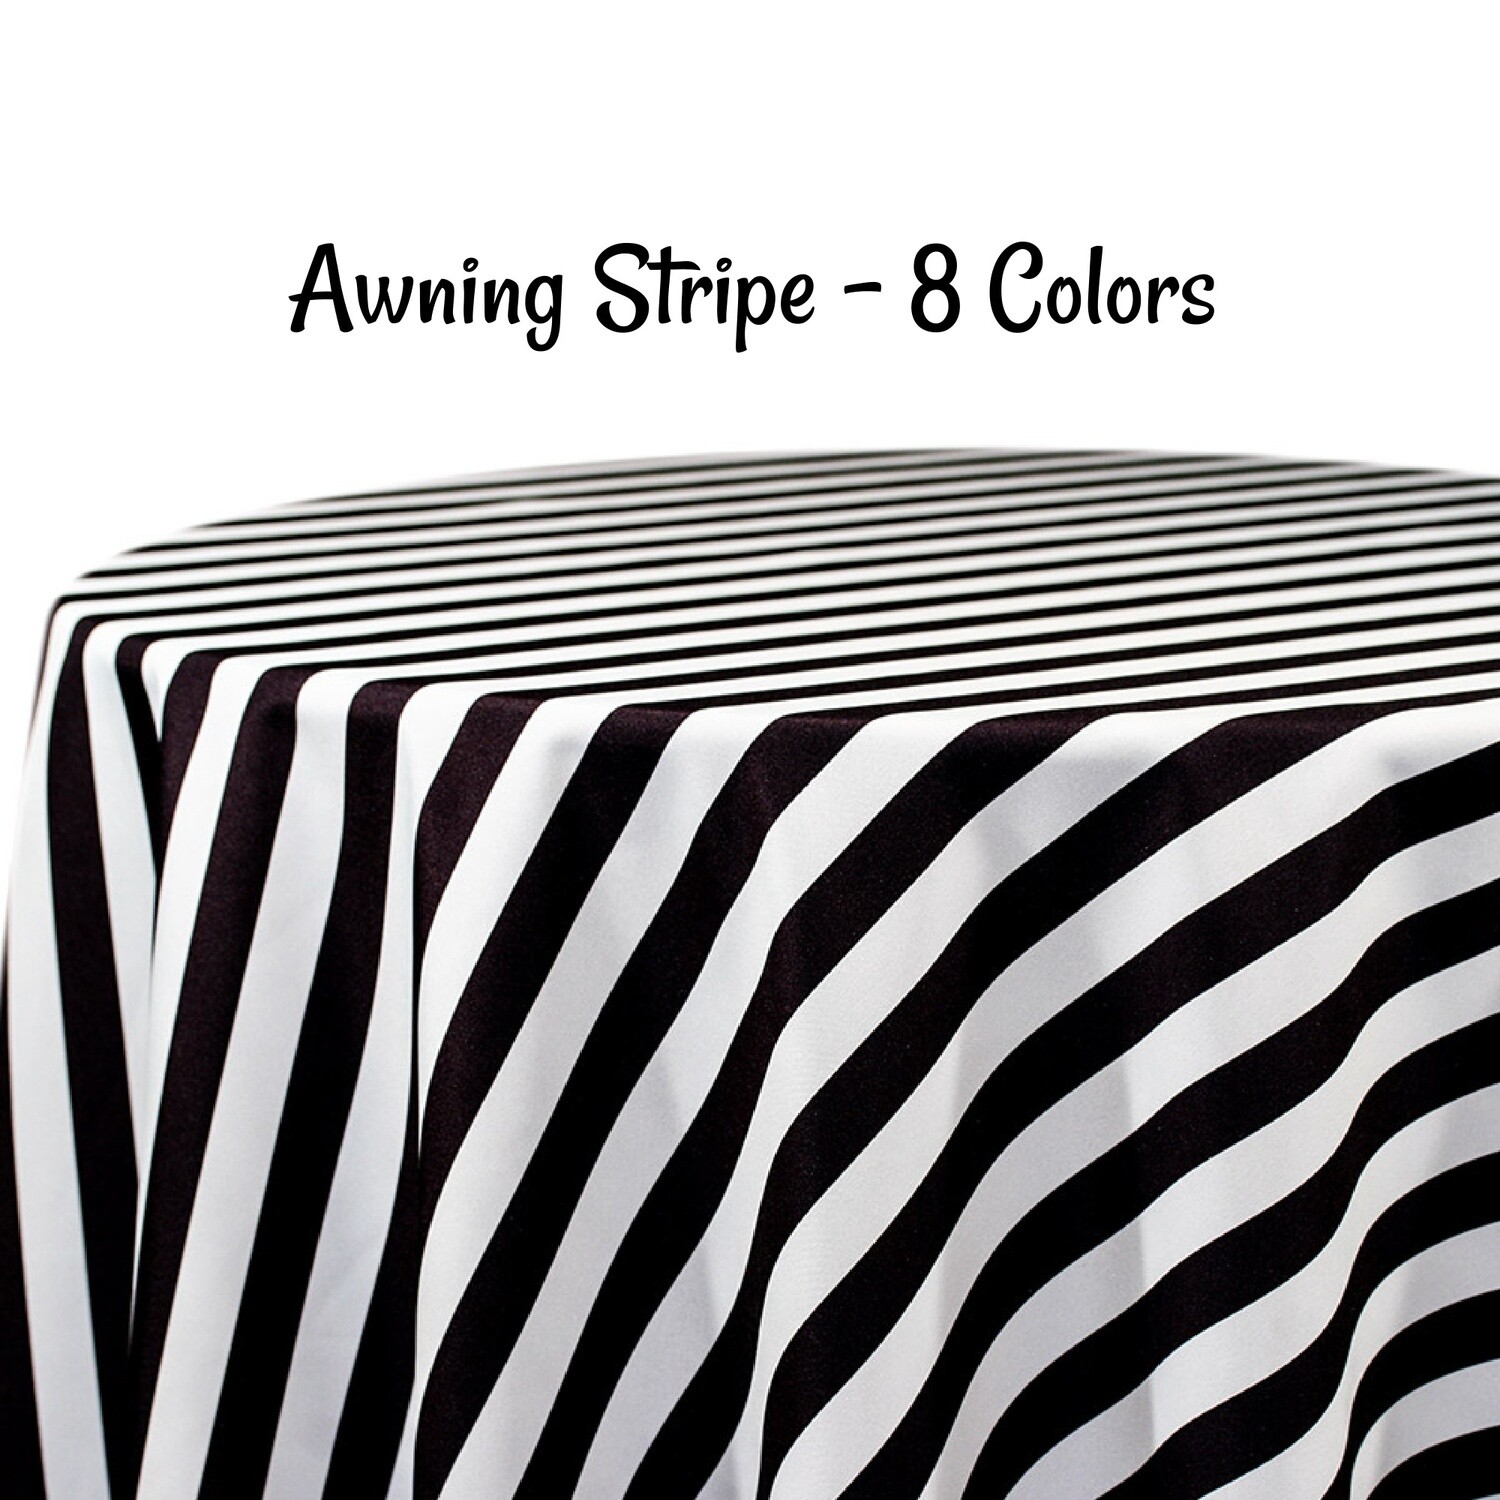 Awning Stripe Fabric Swatch